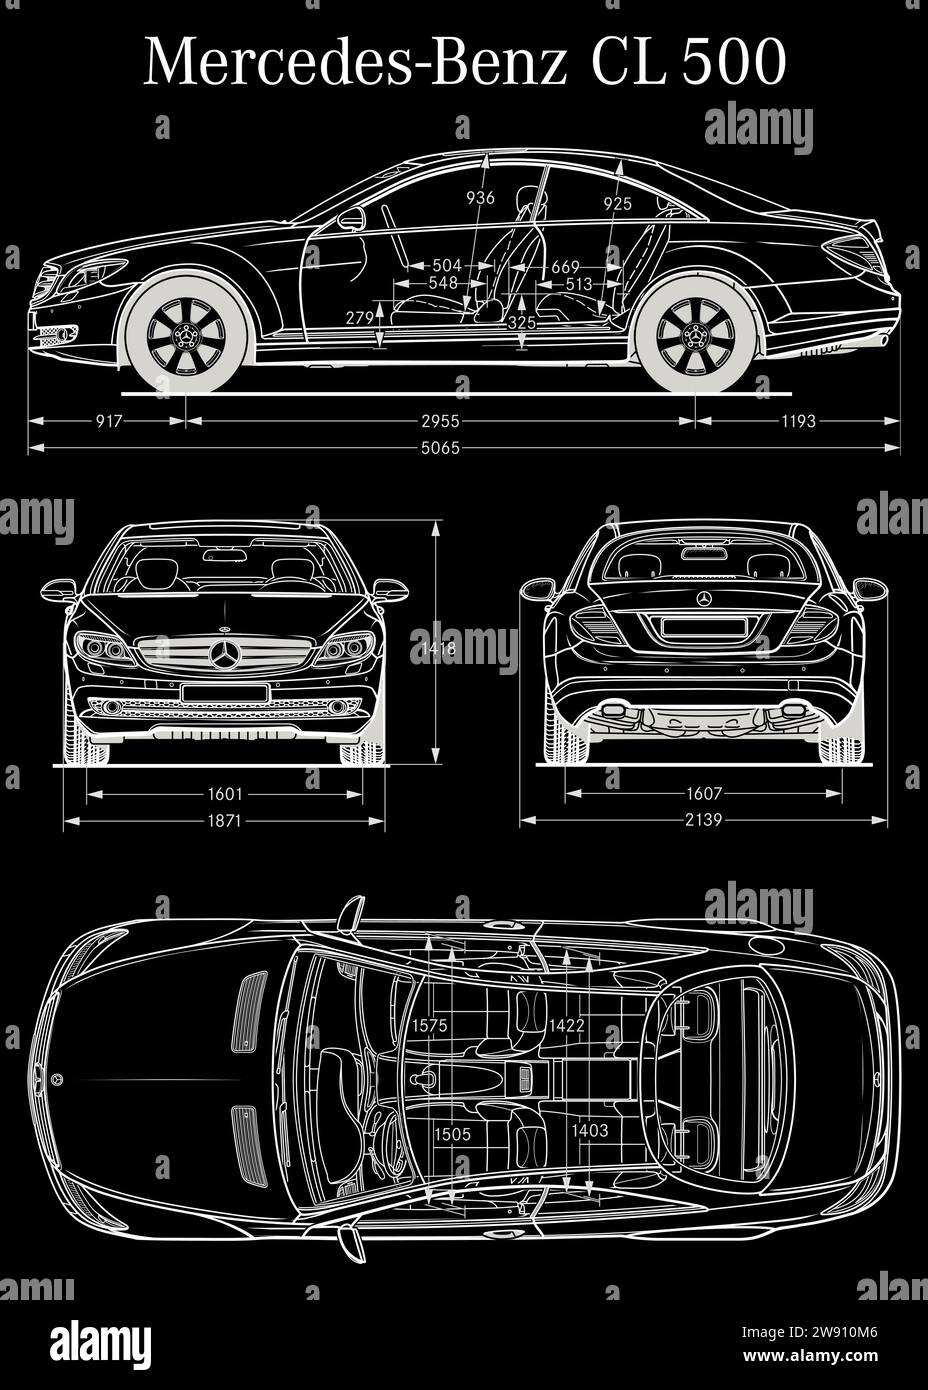 Mercedes Benz CL 500 2007-Bauplan Stock Vektor